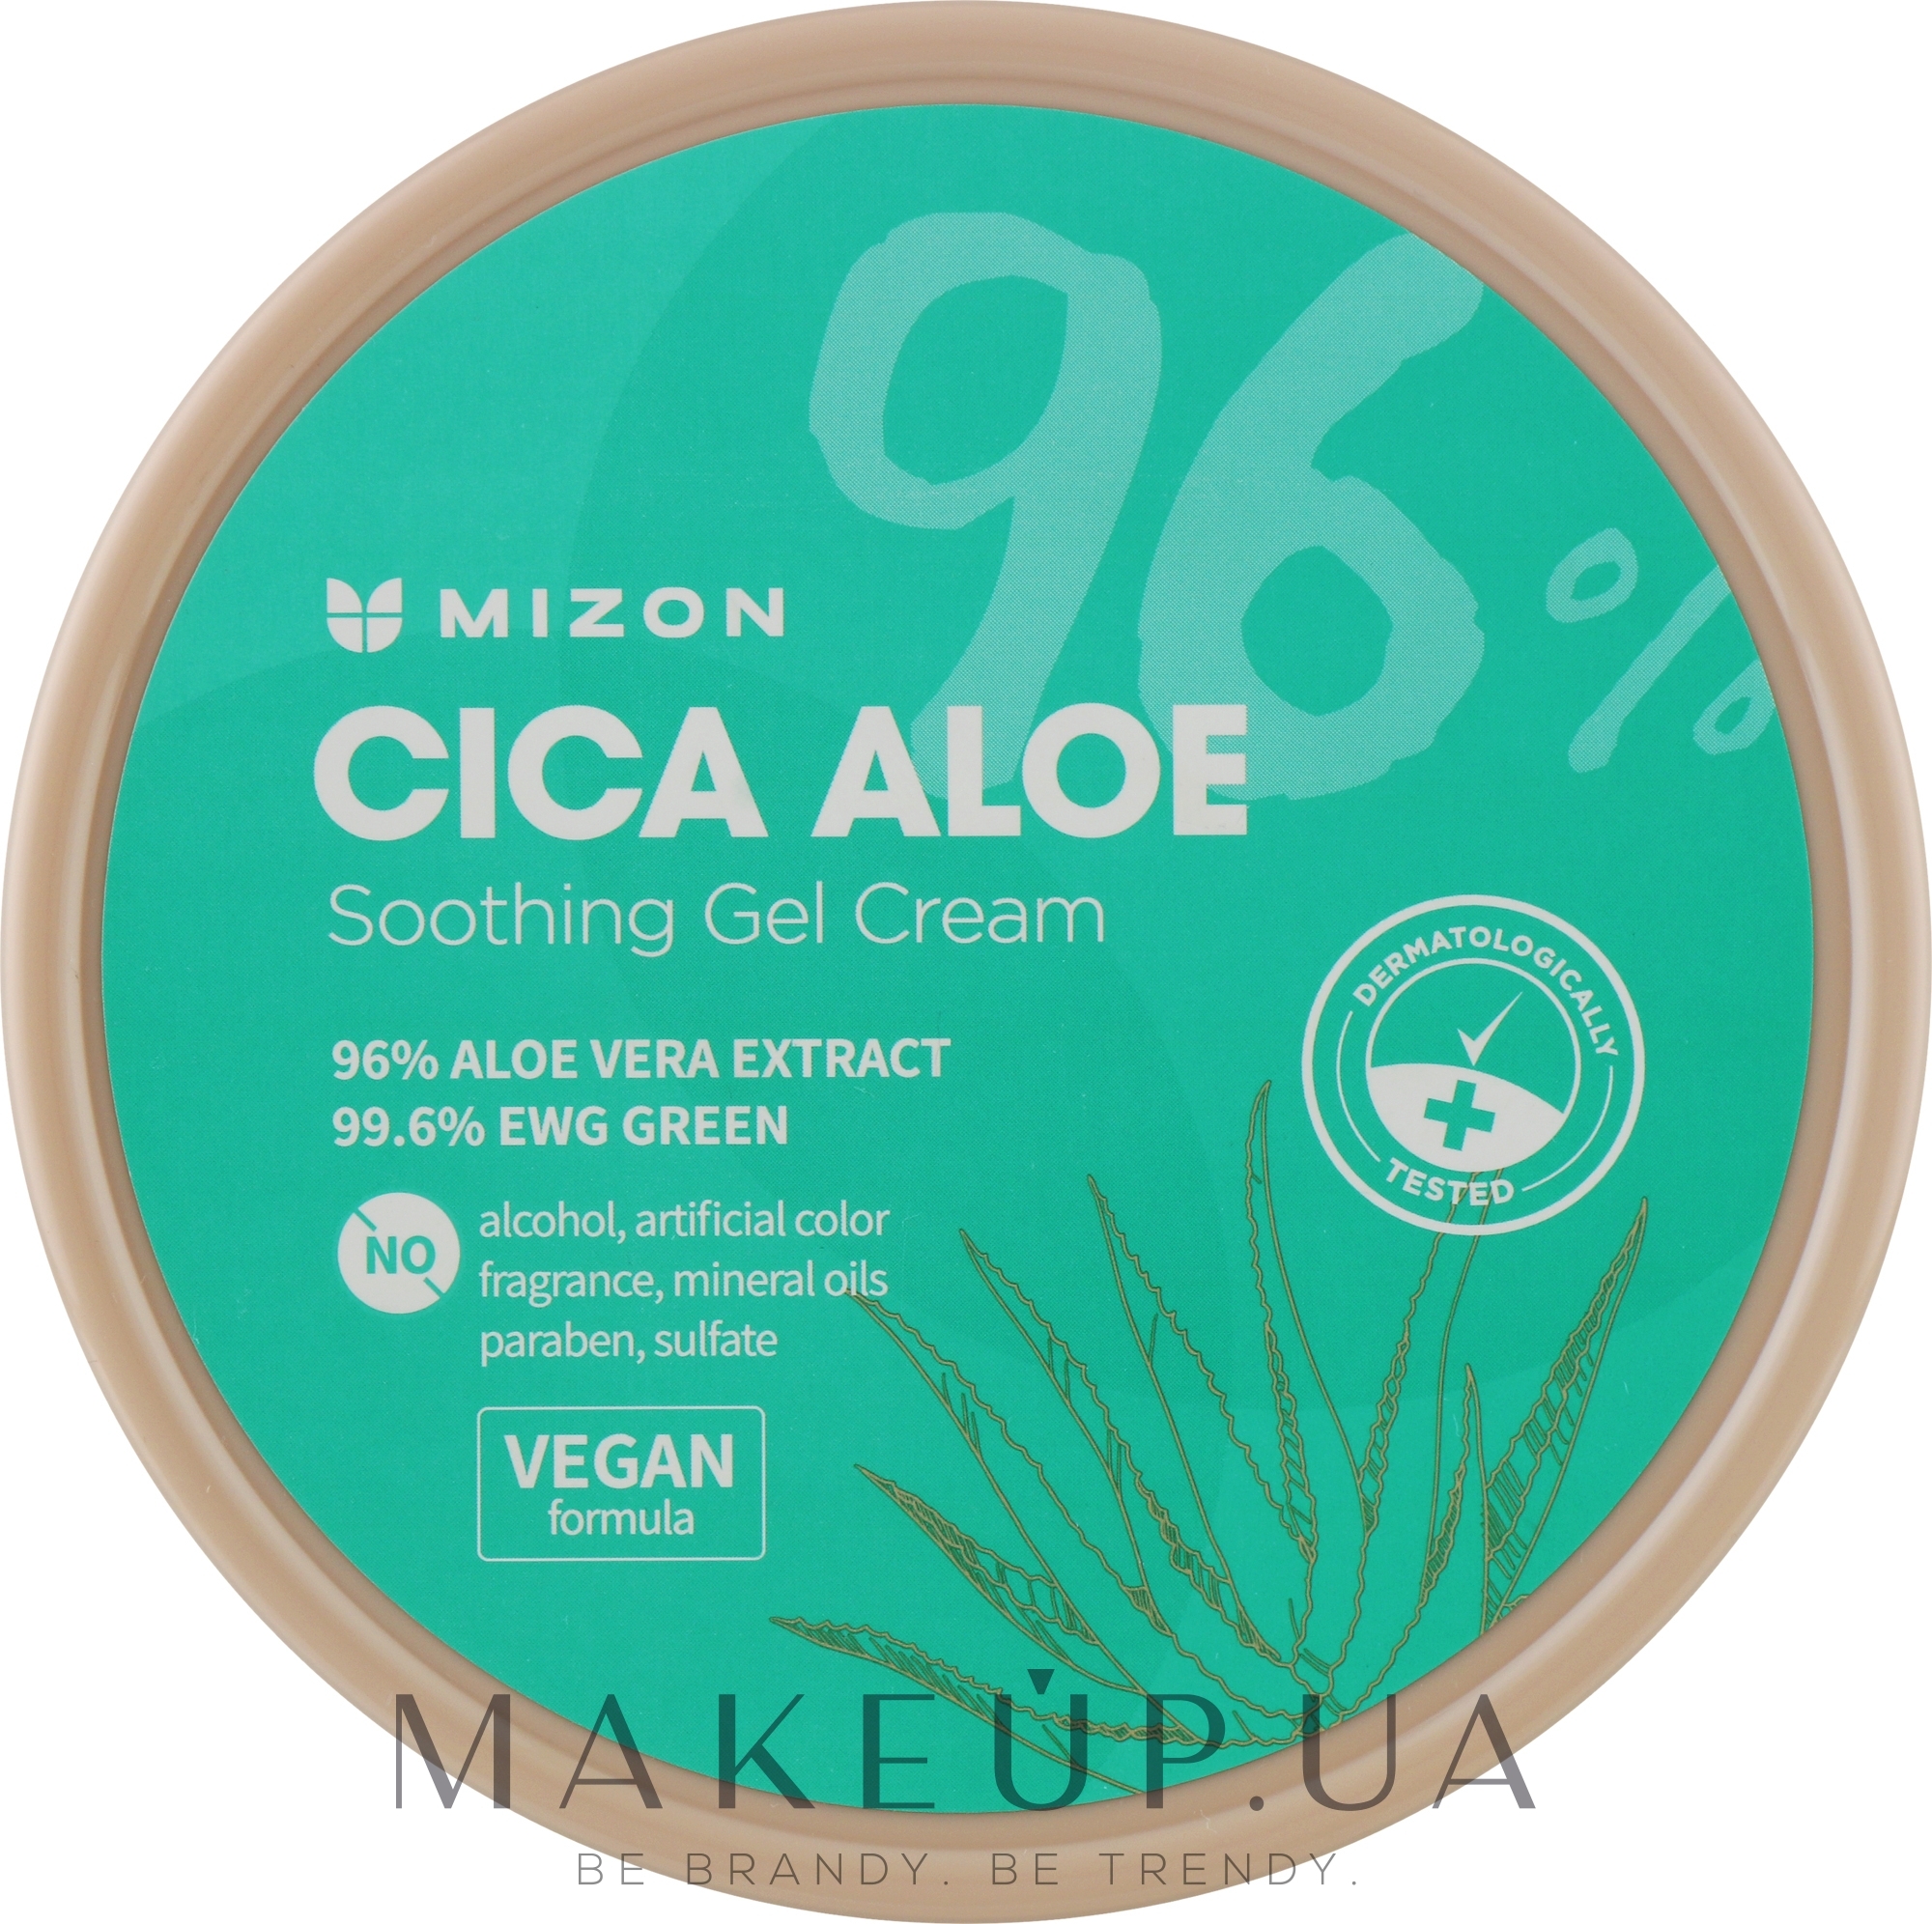 Заспокійливий гель-крем для обличчя й тіла з алое - Mizon Cica Aloe 96% Soothing Gel Cream — фото 300g